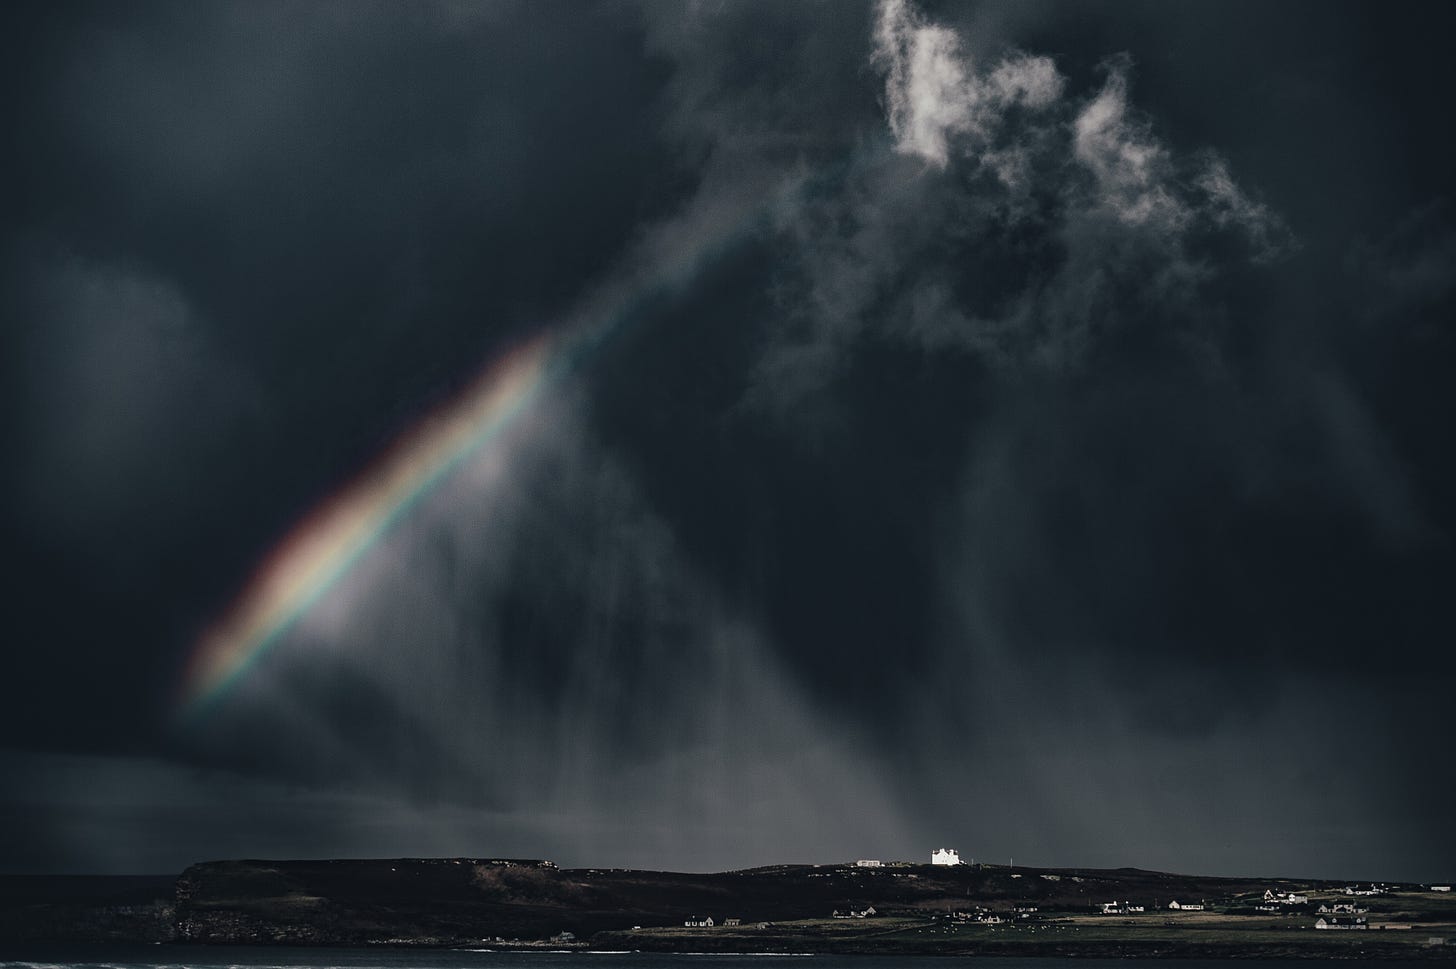 Light and a faint rainbow appearing through dark clouds